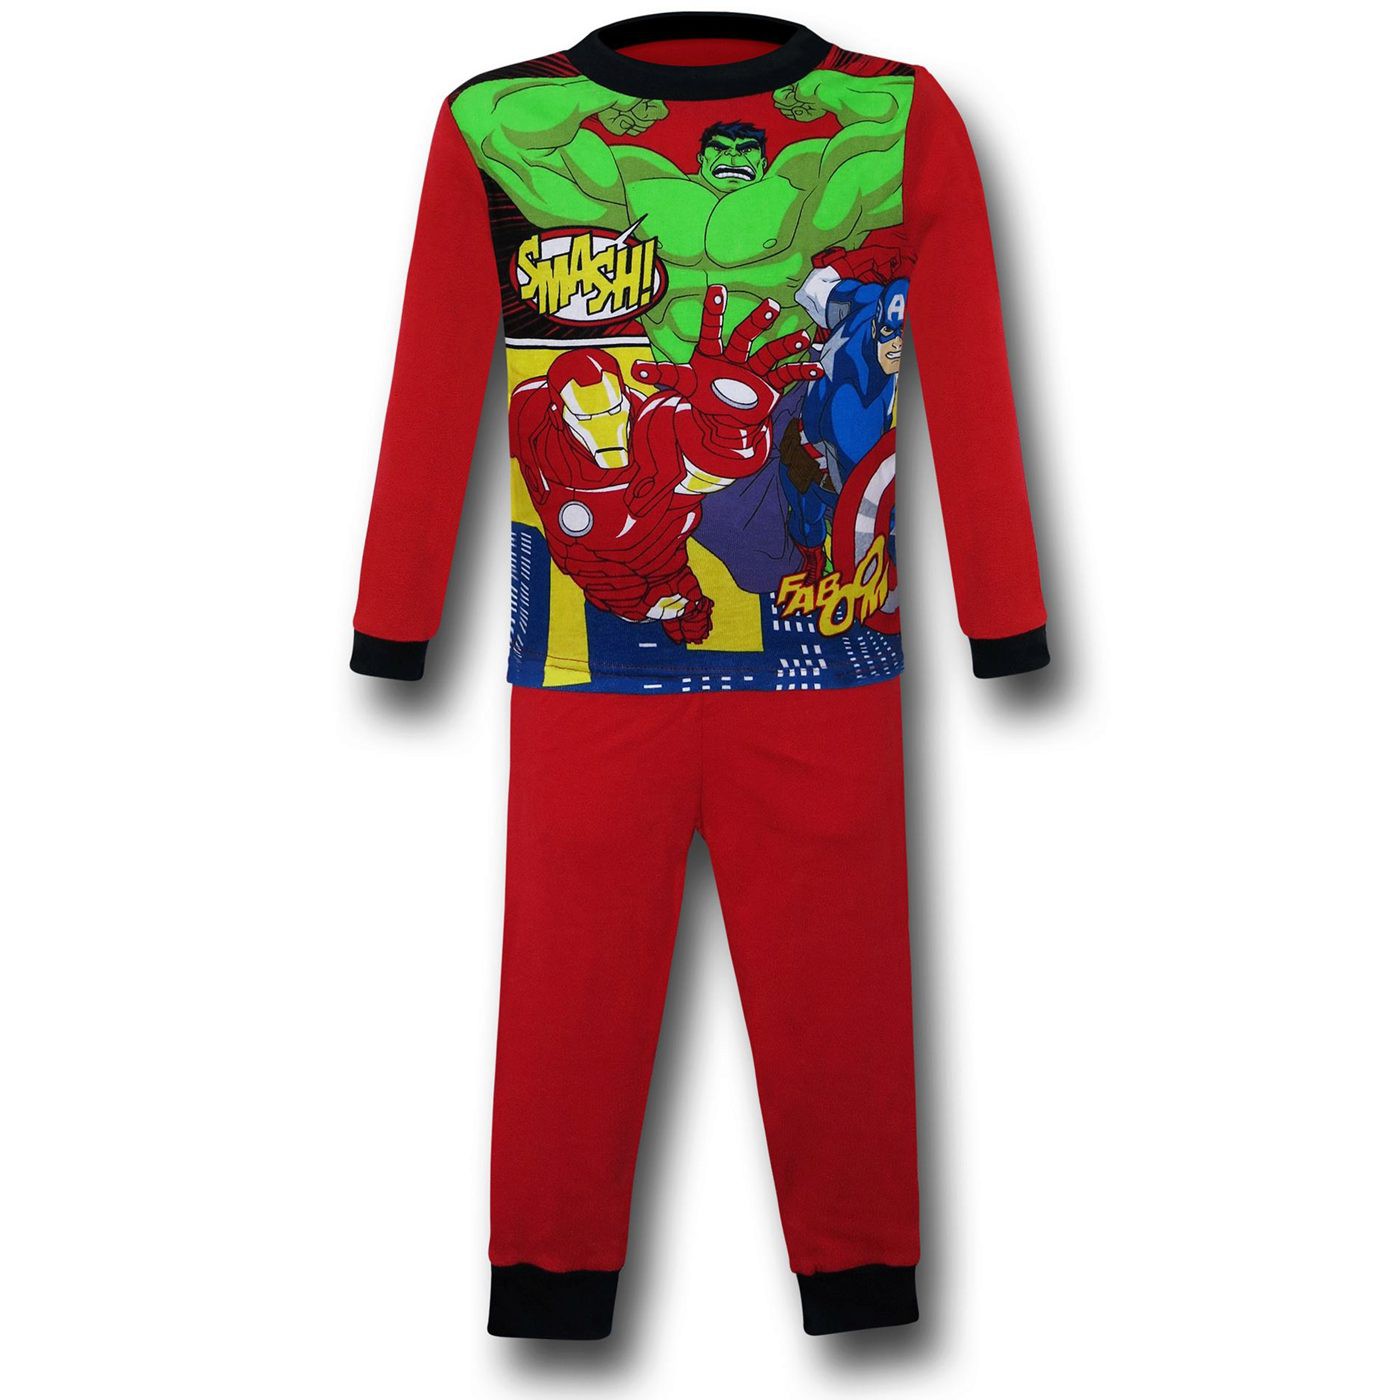 Avengers Group Red 2-Piece Kids Pajama Set